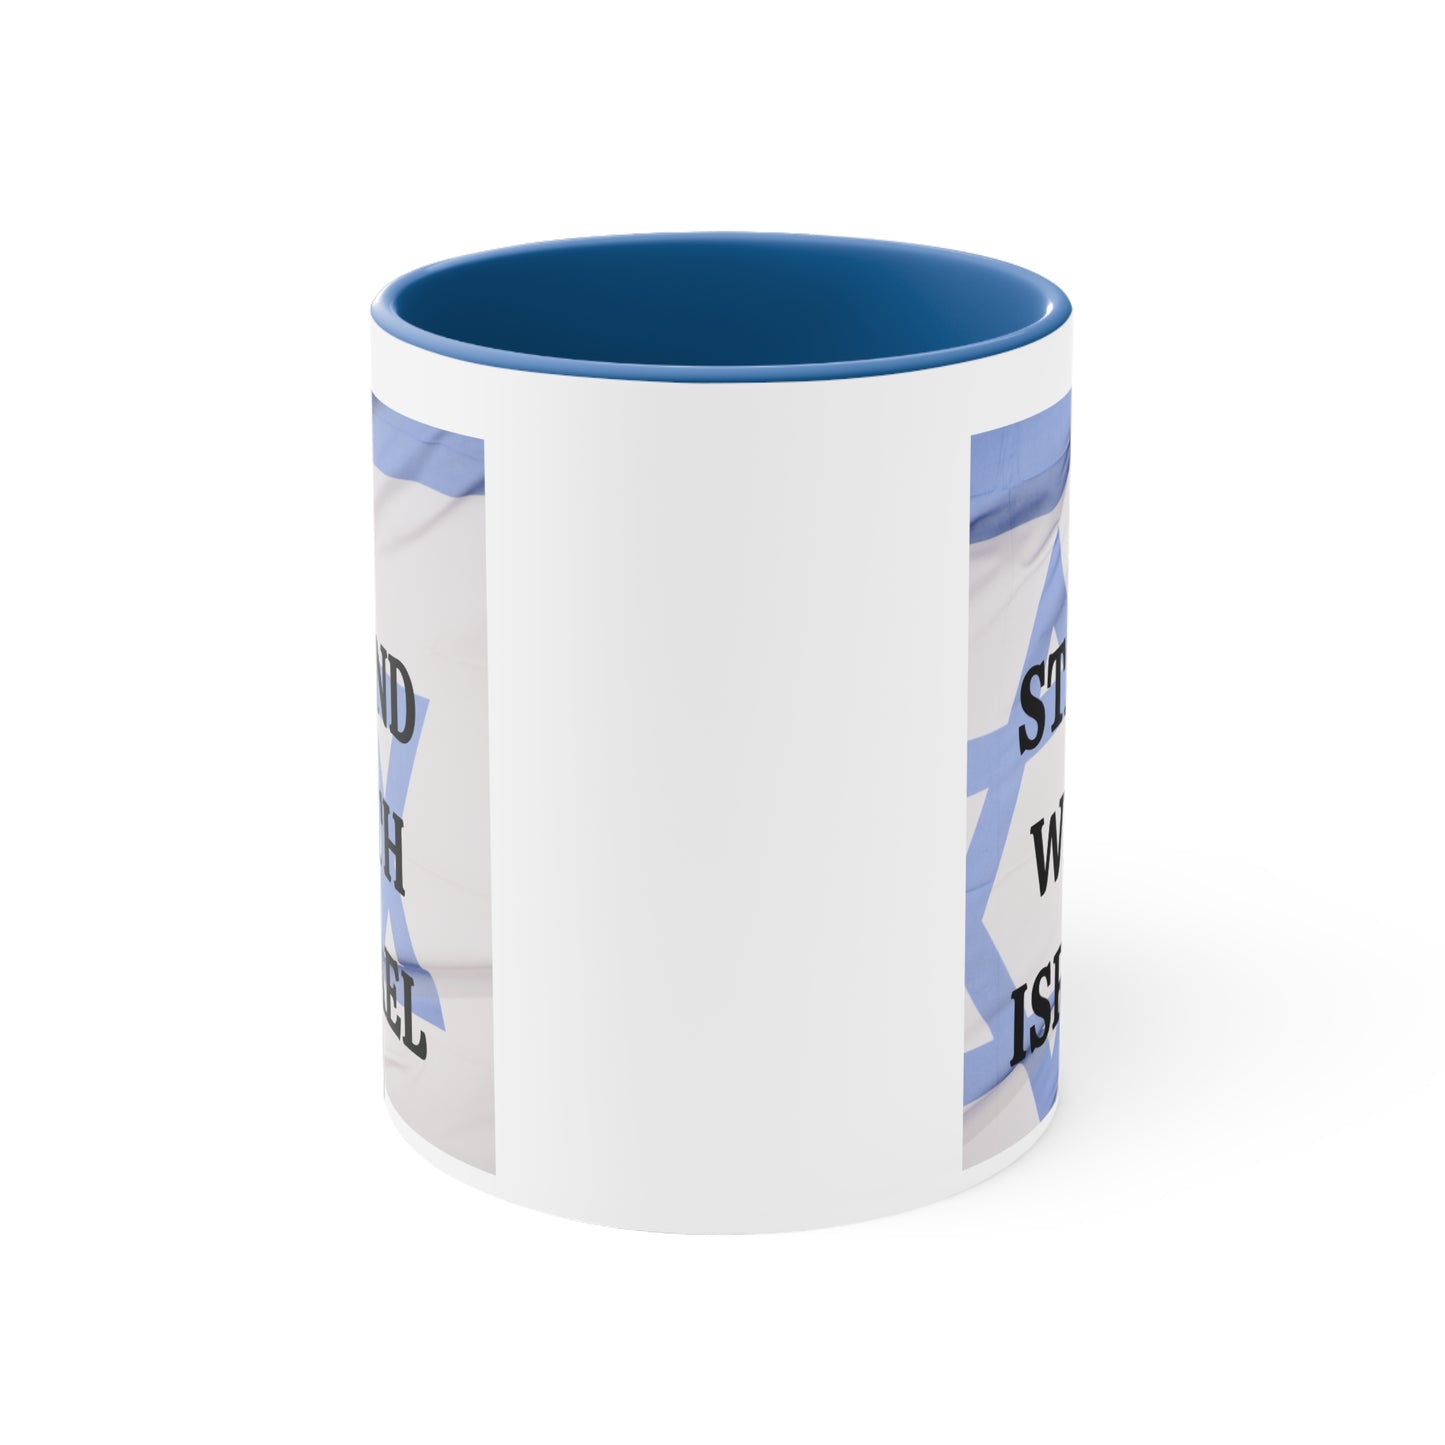 I stand with Israel - 11oz ceramic mug